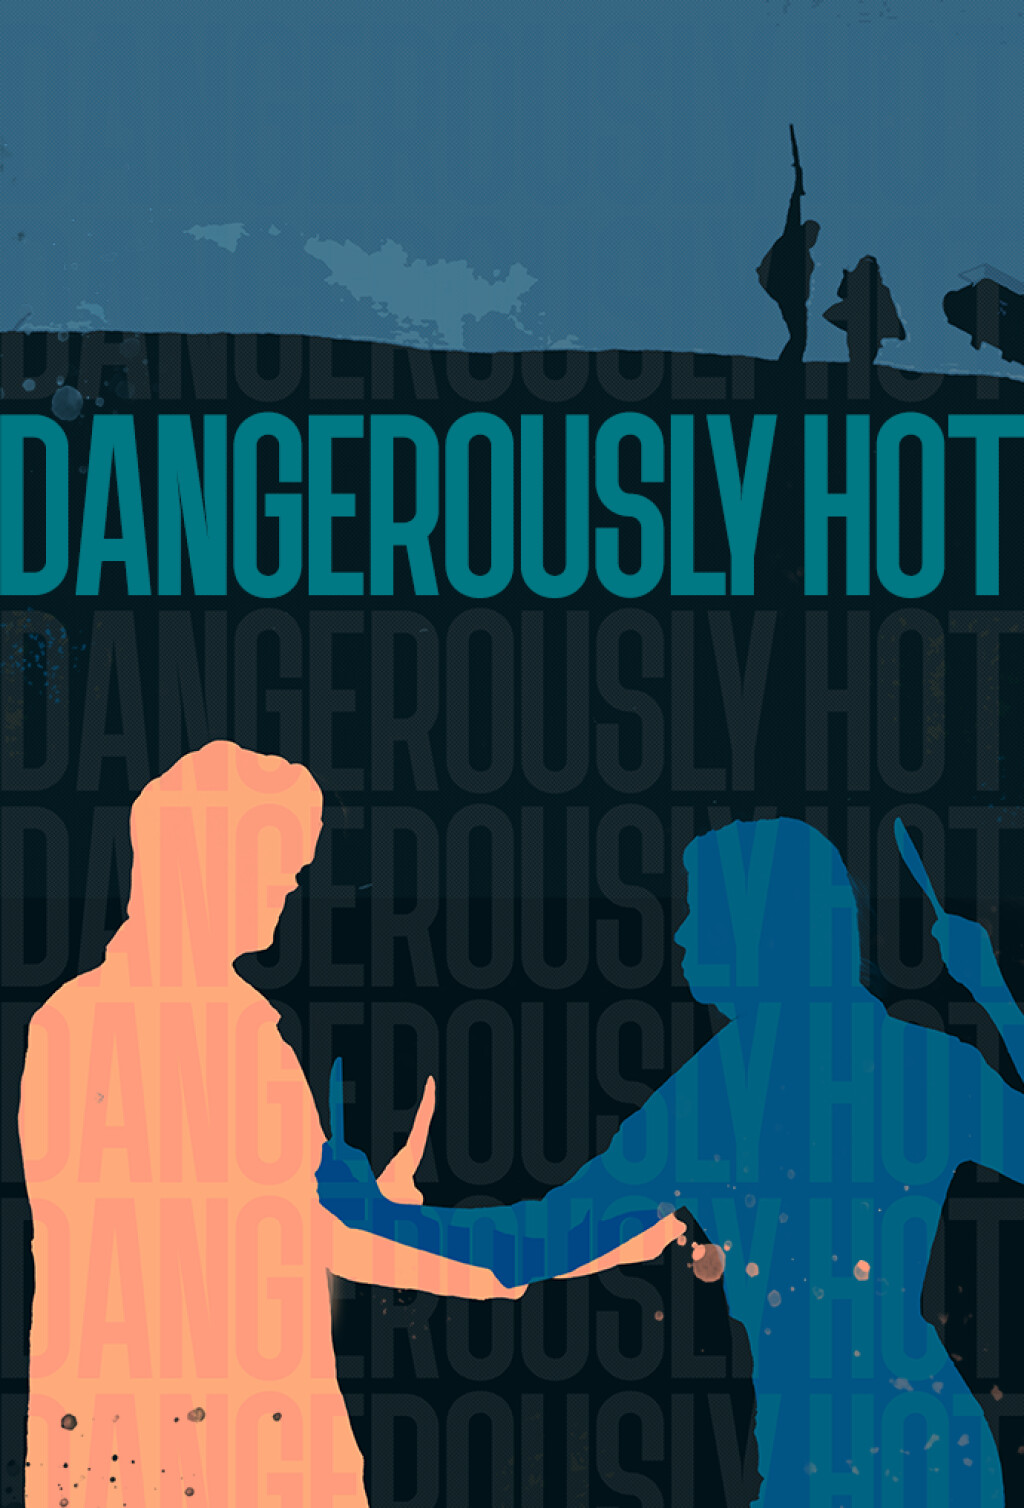 Filmposter for Dangerously Hot